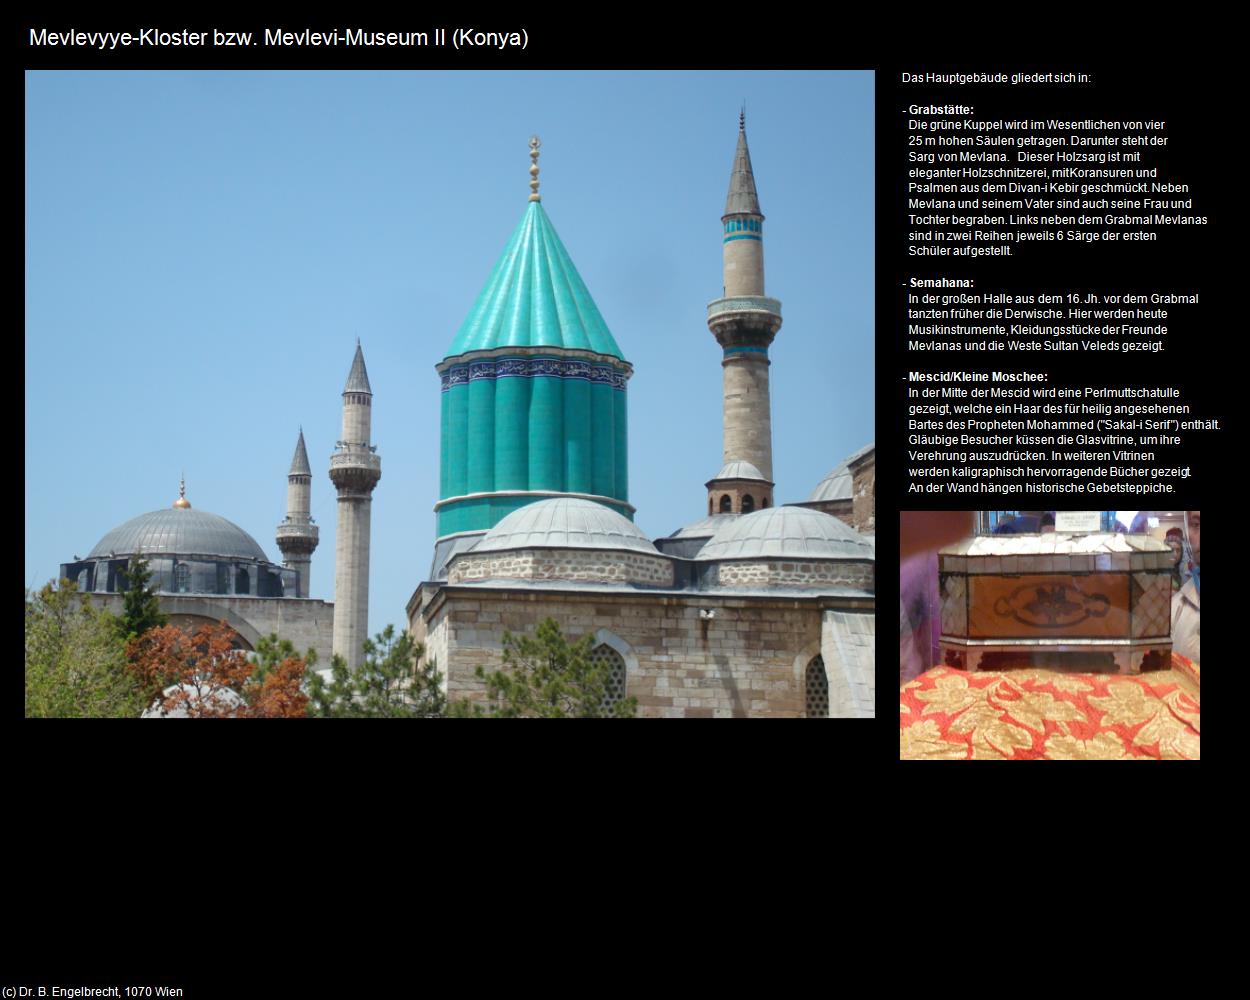 Mevlevyye-Kloster II (Konya) in TÜRKEI